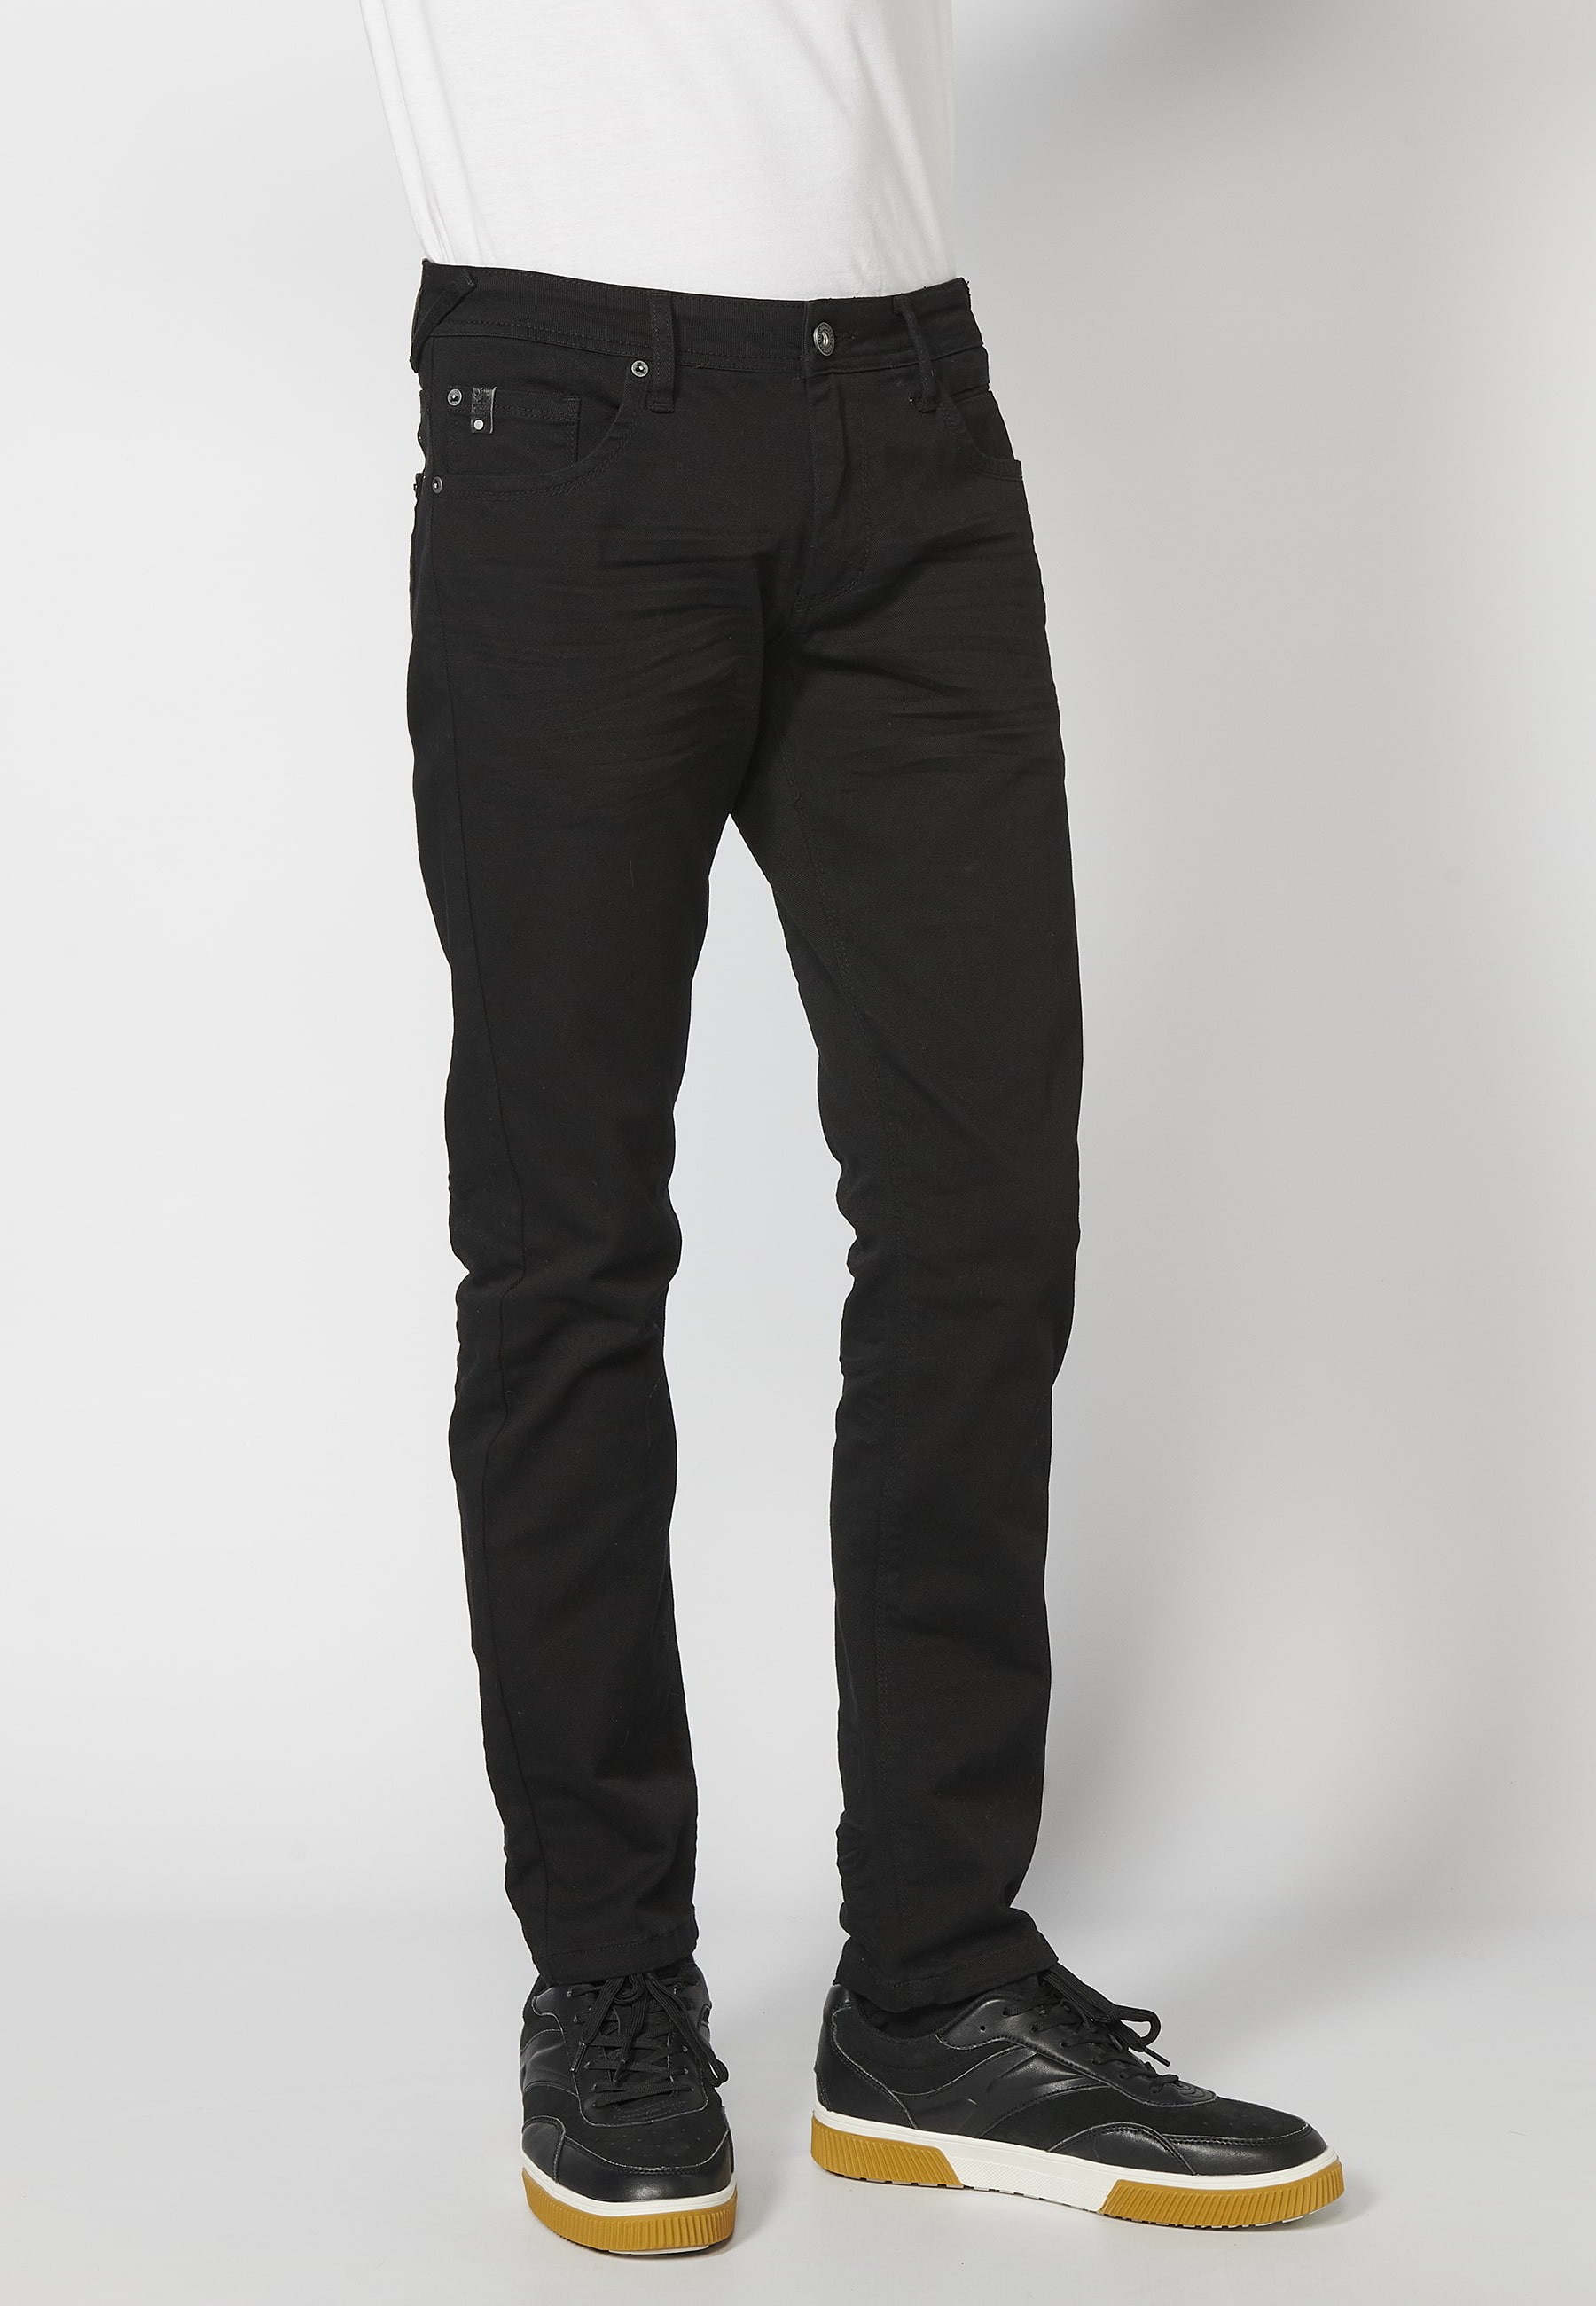 Pantalón largo straigth regular fit, con cinco bolsillos, color Negro, para Hombre